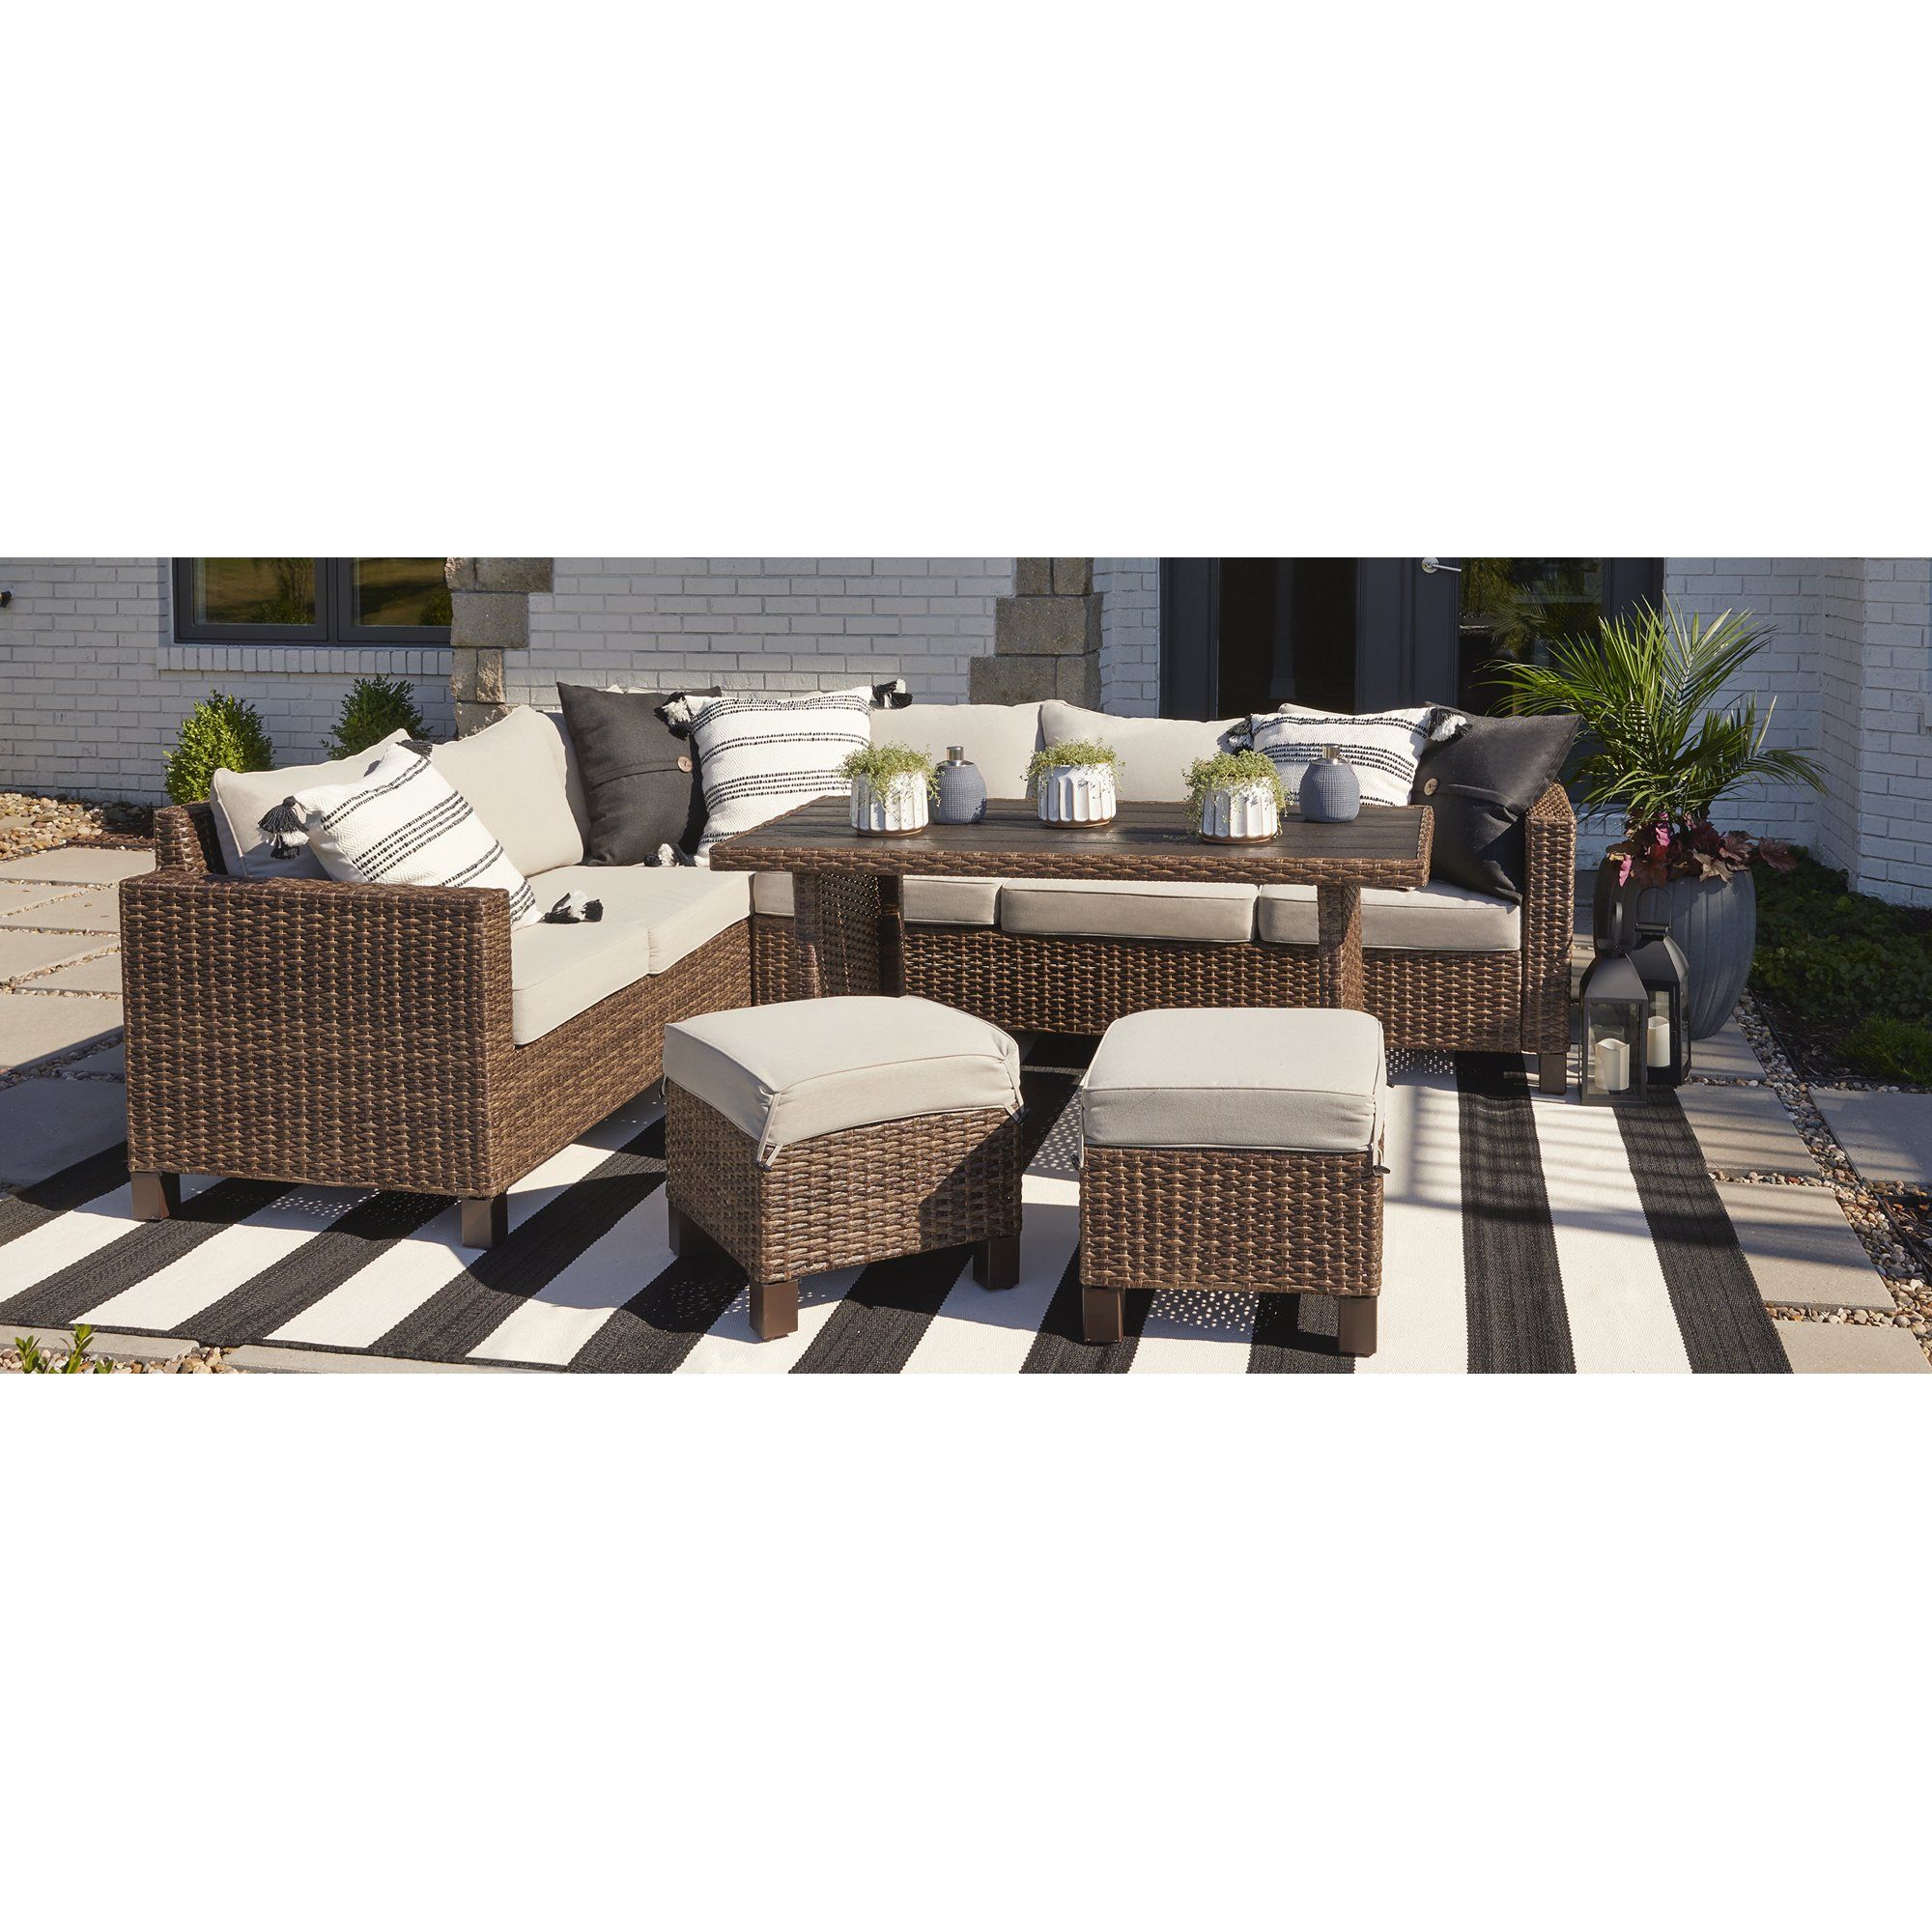 Better Homes & Gardens Brookbury Wicker Sectional Sofa Patio Dining Set, 5 Pieces | Walmart (US)